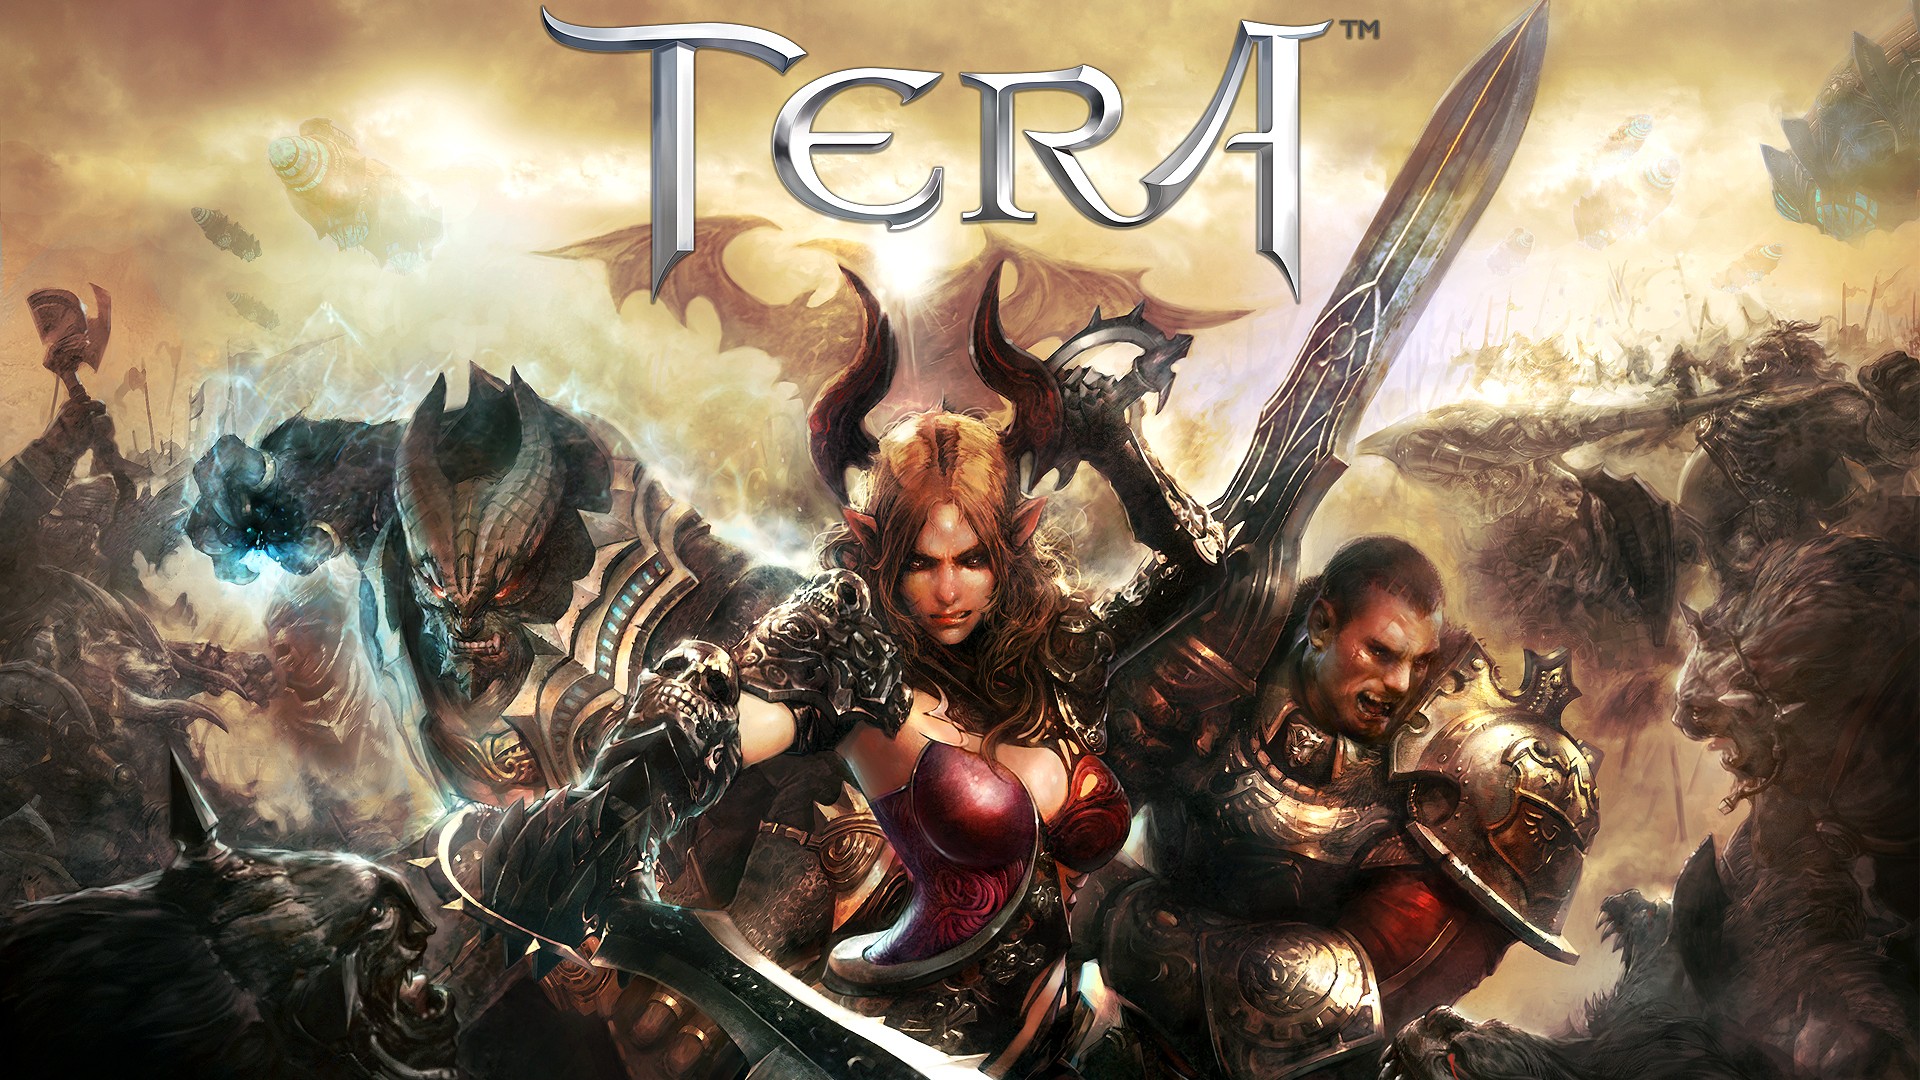 General 1920x1080 video games Tera Tera online Tera Rising  video game girls fantasy art fantasy girl pointy ears women with swords video game art PC gaming